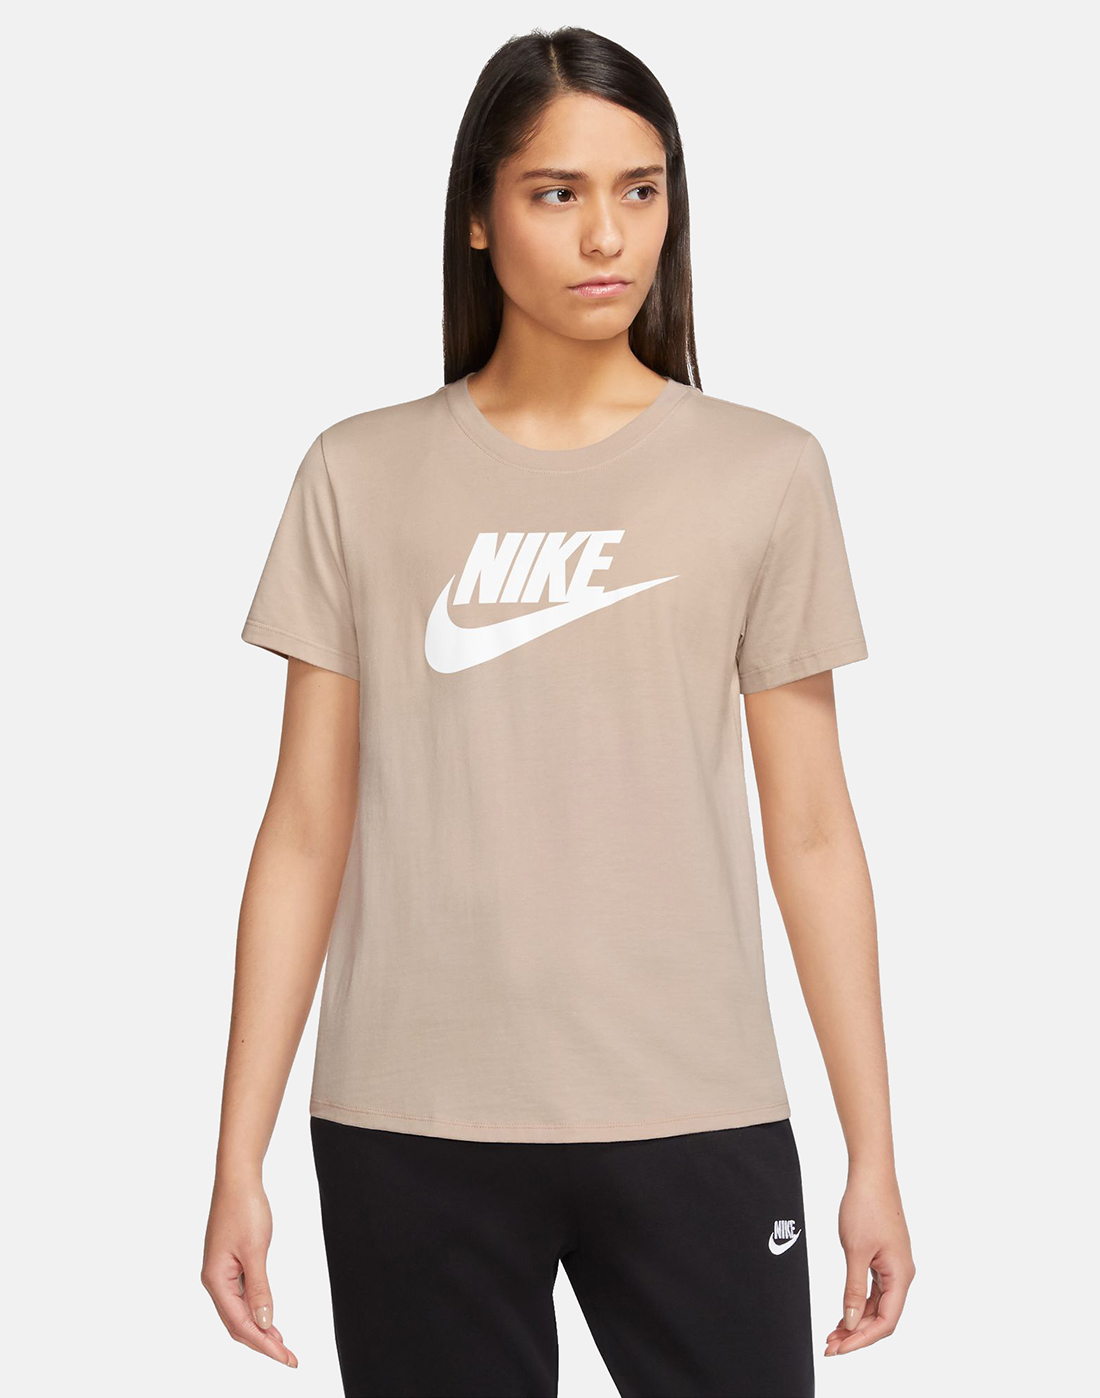 Nike Womens Essential T-Shirt - Cream | Life Style Sports EU